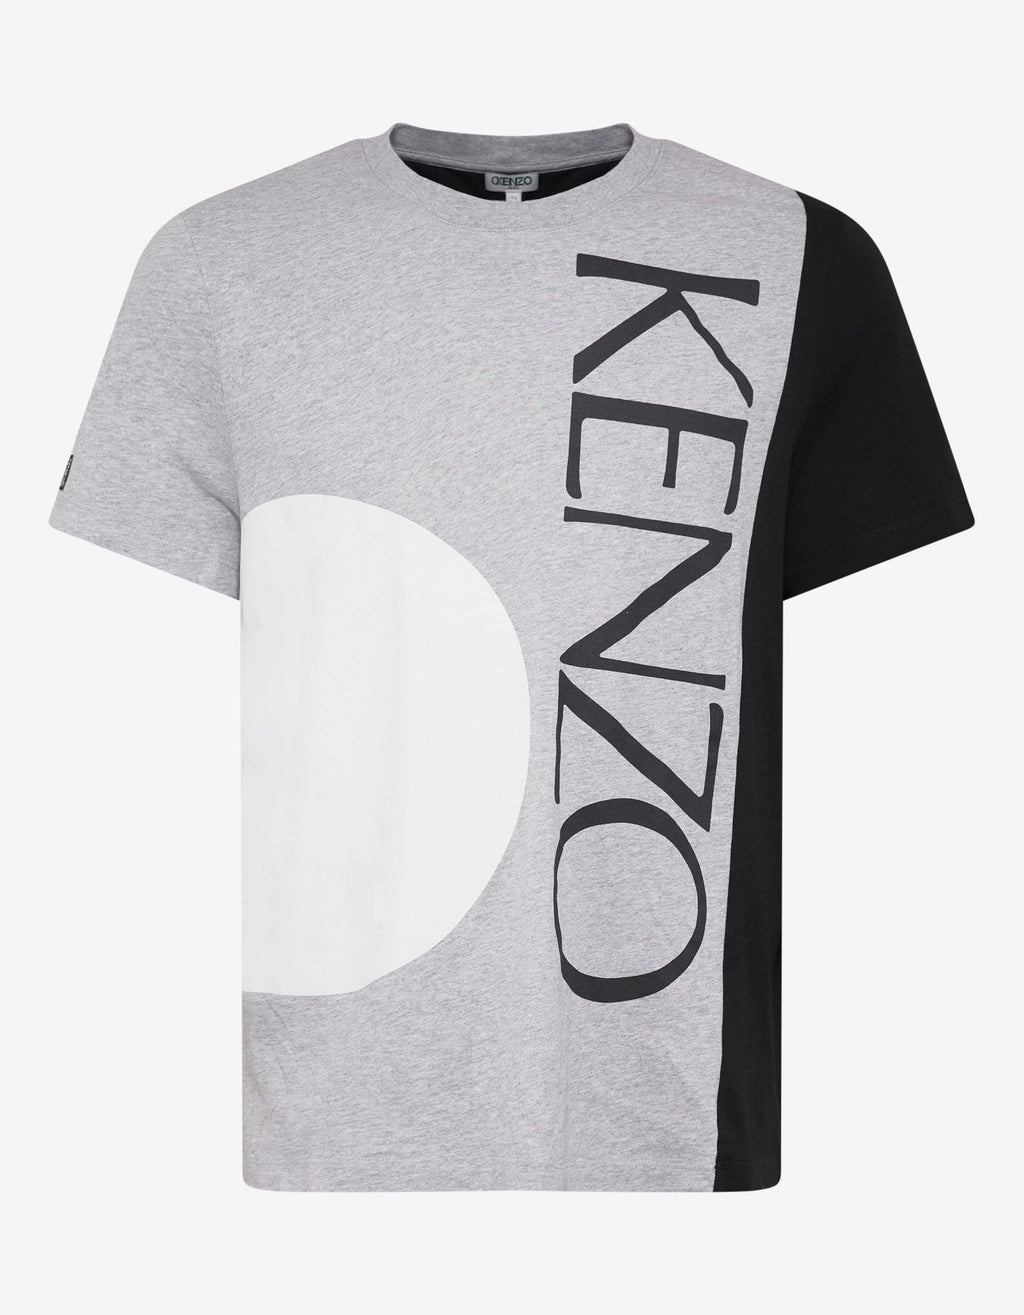 Kenzo Kenzo Grey White Circle Print T-Shirt